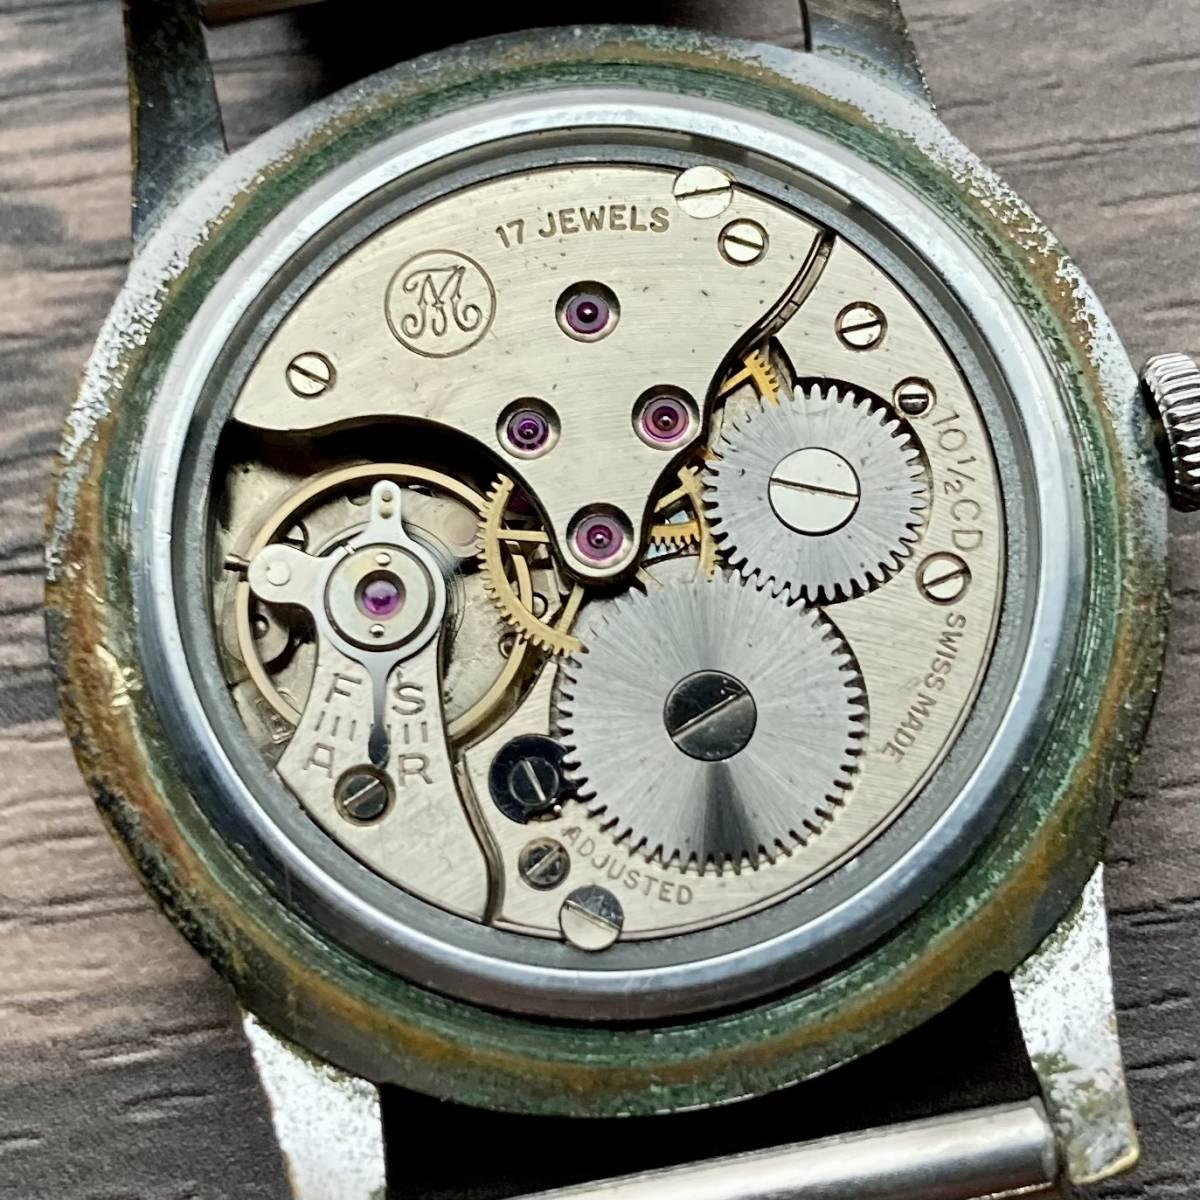 Antique Wristwatch Moeris Manual Men's 32mm Vintage Watch Men Round Silver - Murphy Johnson Watches Co.